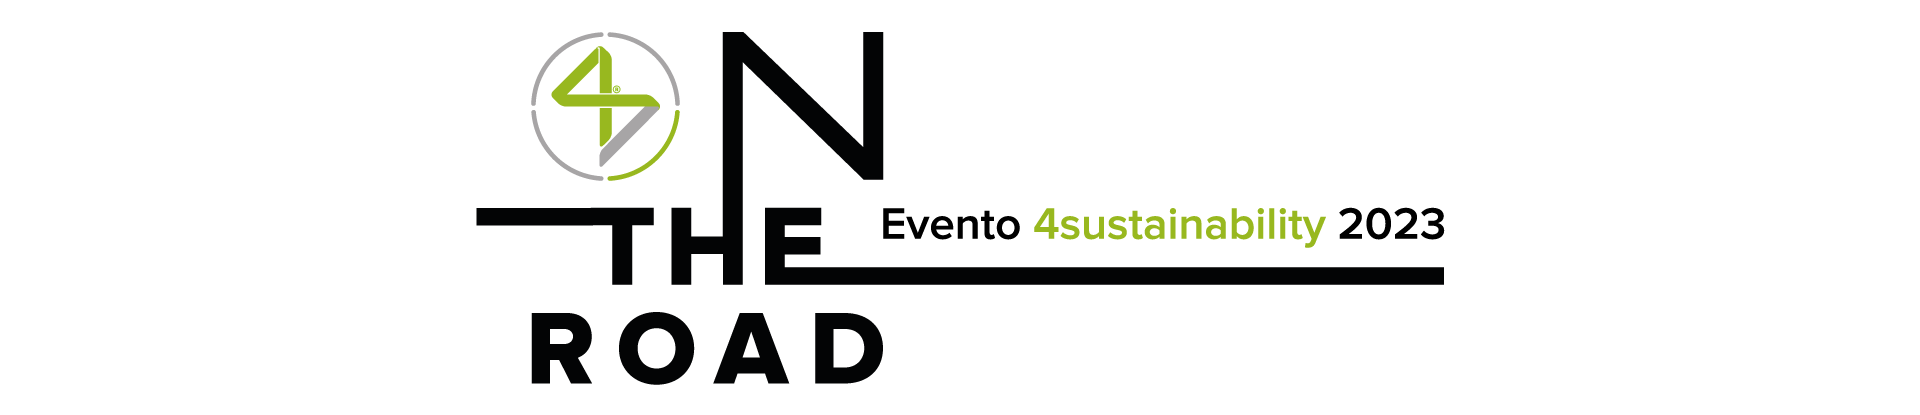 logo on the road 4sustainability evento